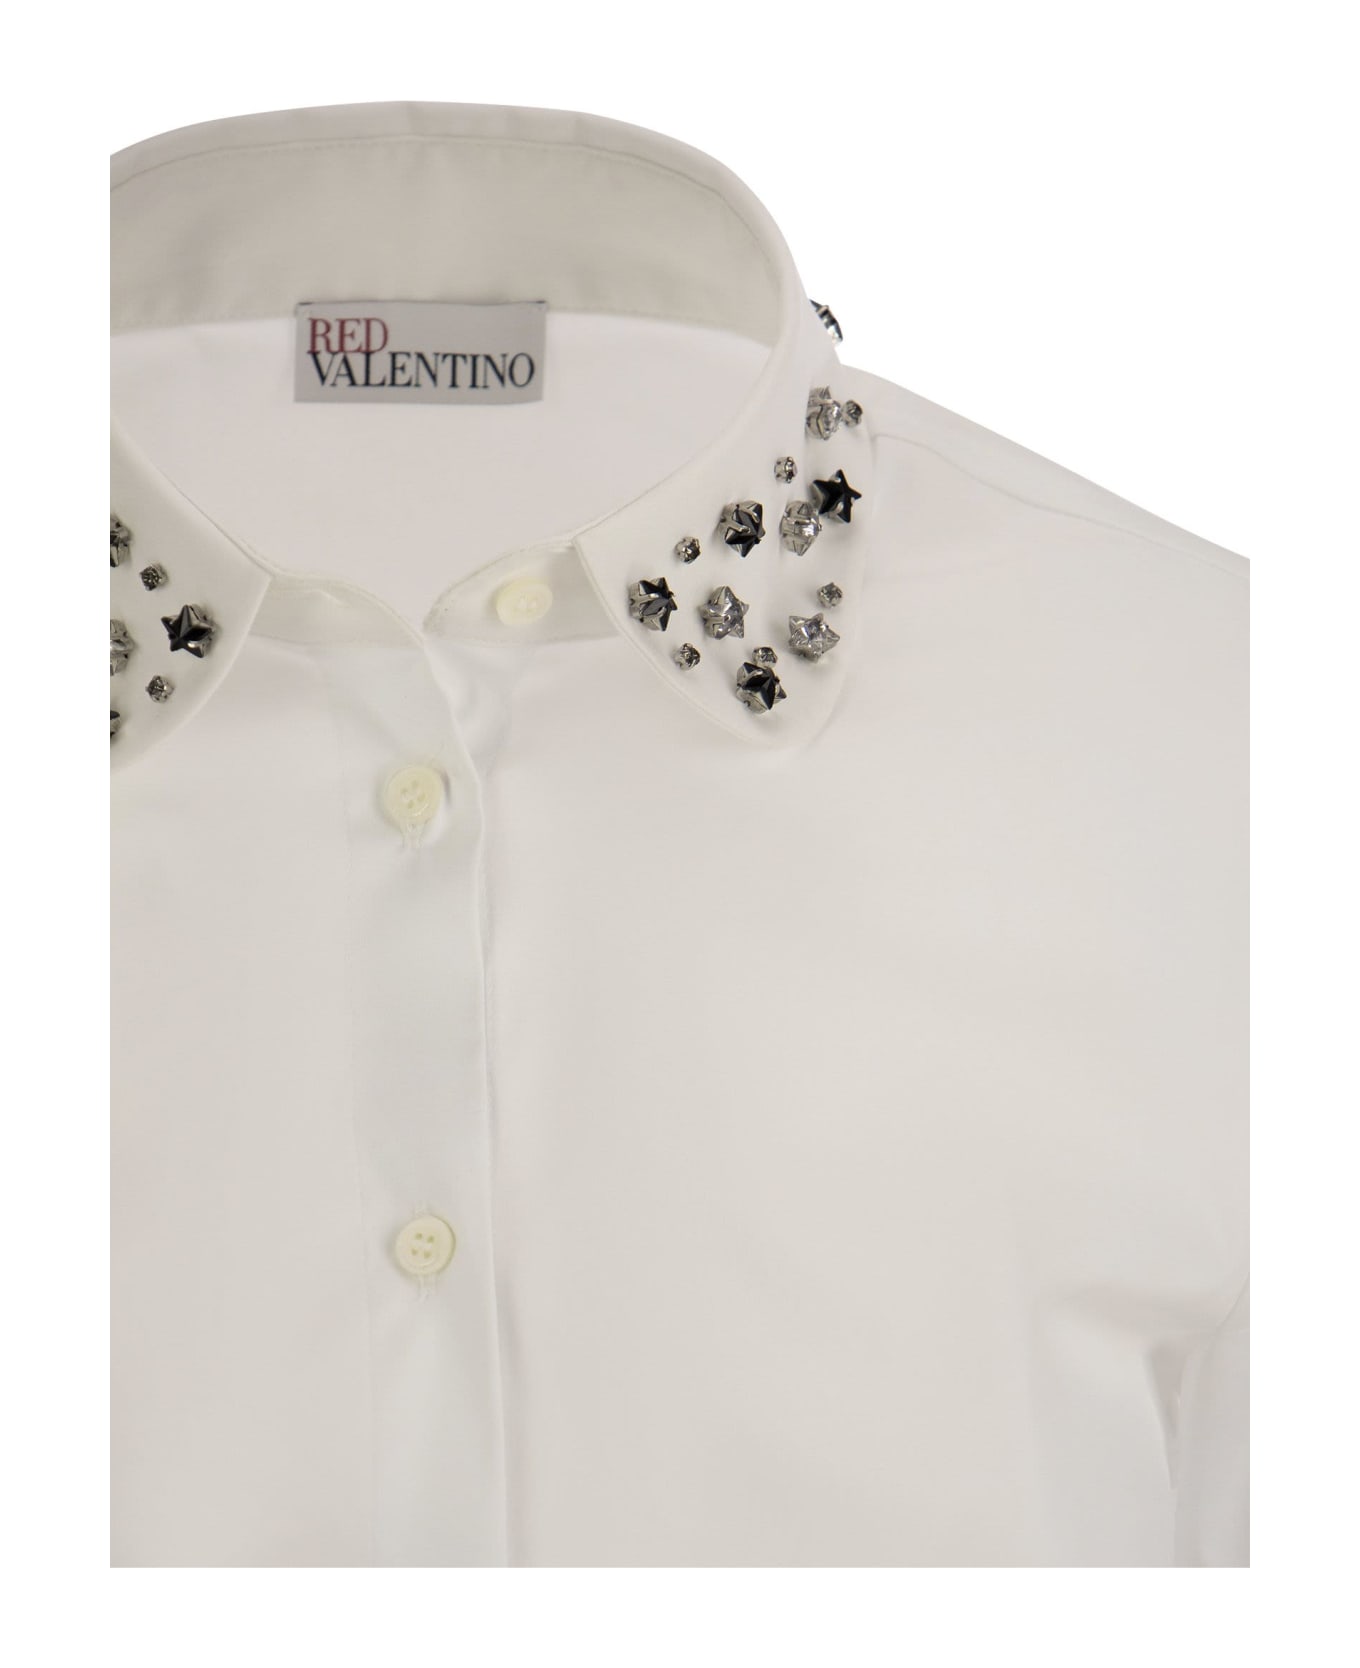 RED Valentino Shirt In White Cotton - White シャツ